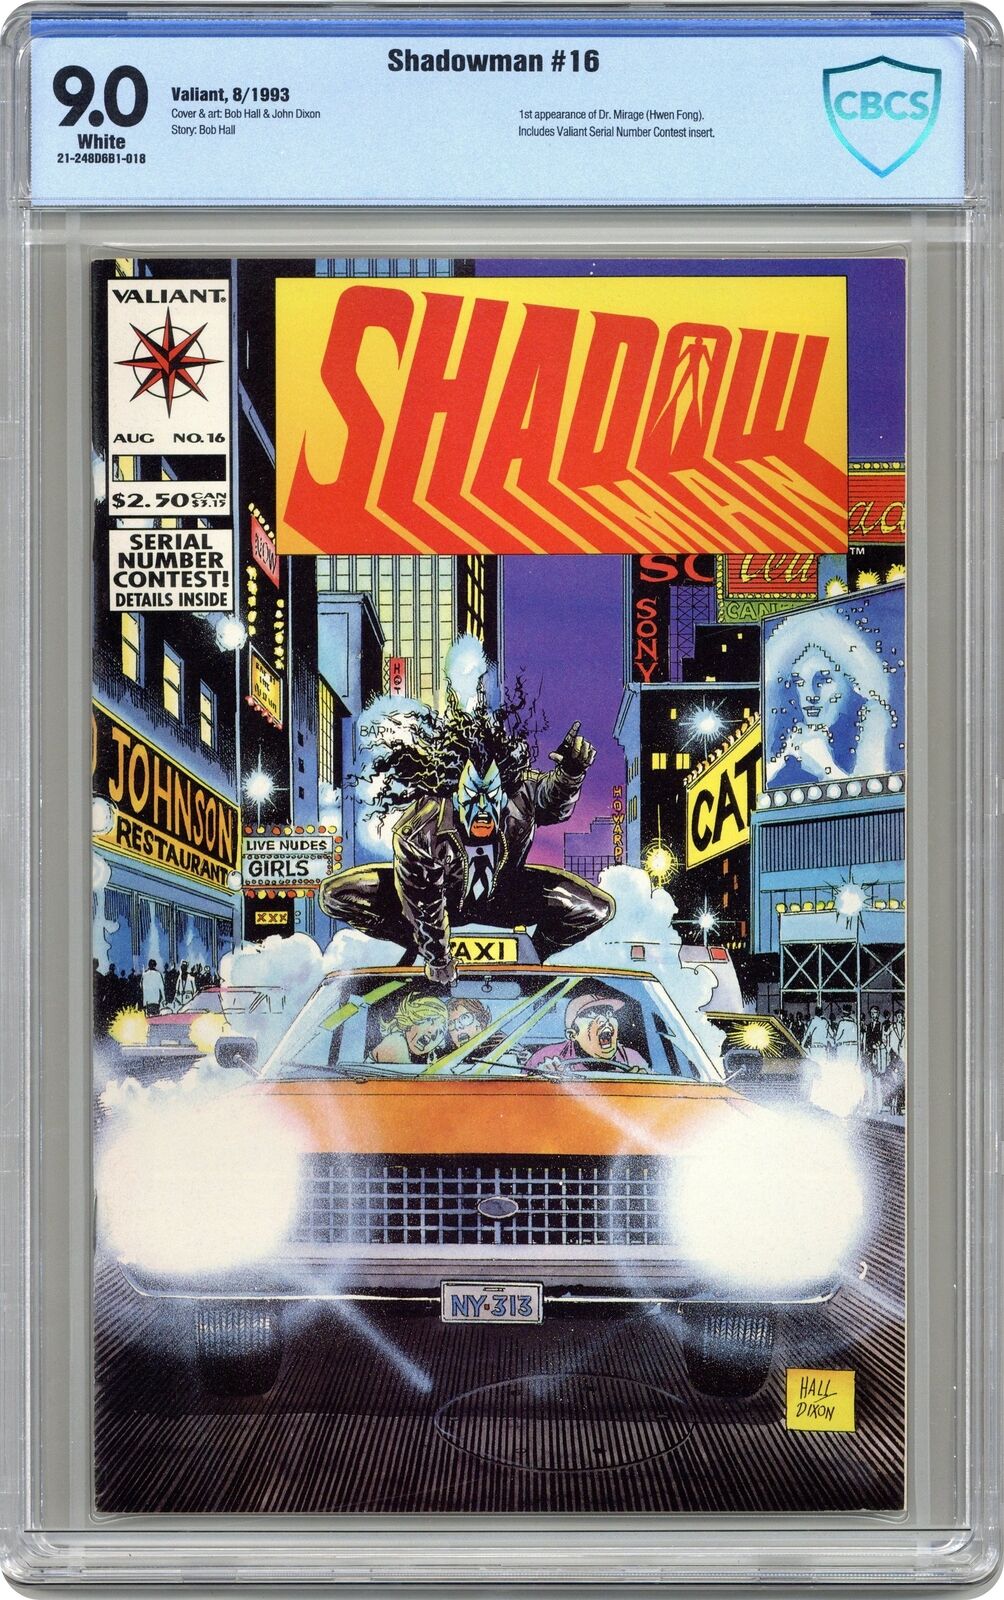 Shadowman #16 CBCS 9.0 1993 21-248D6B1-018